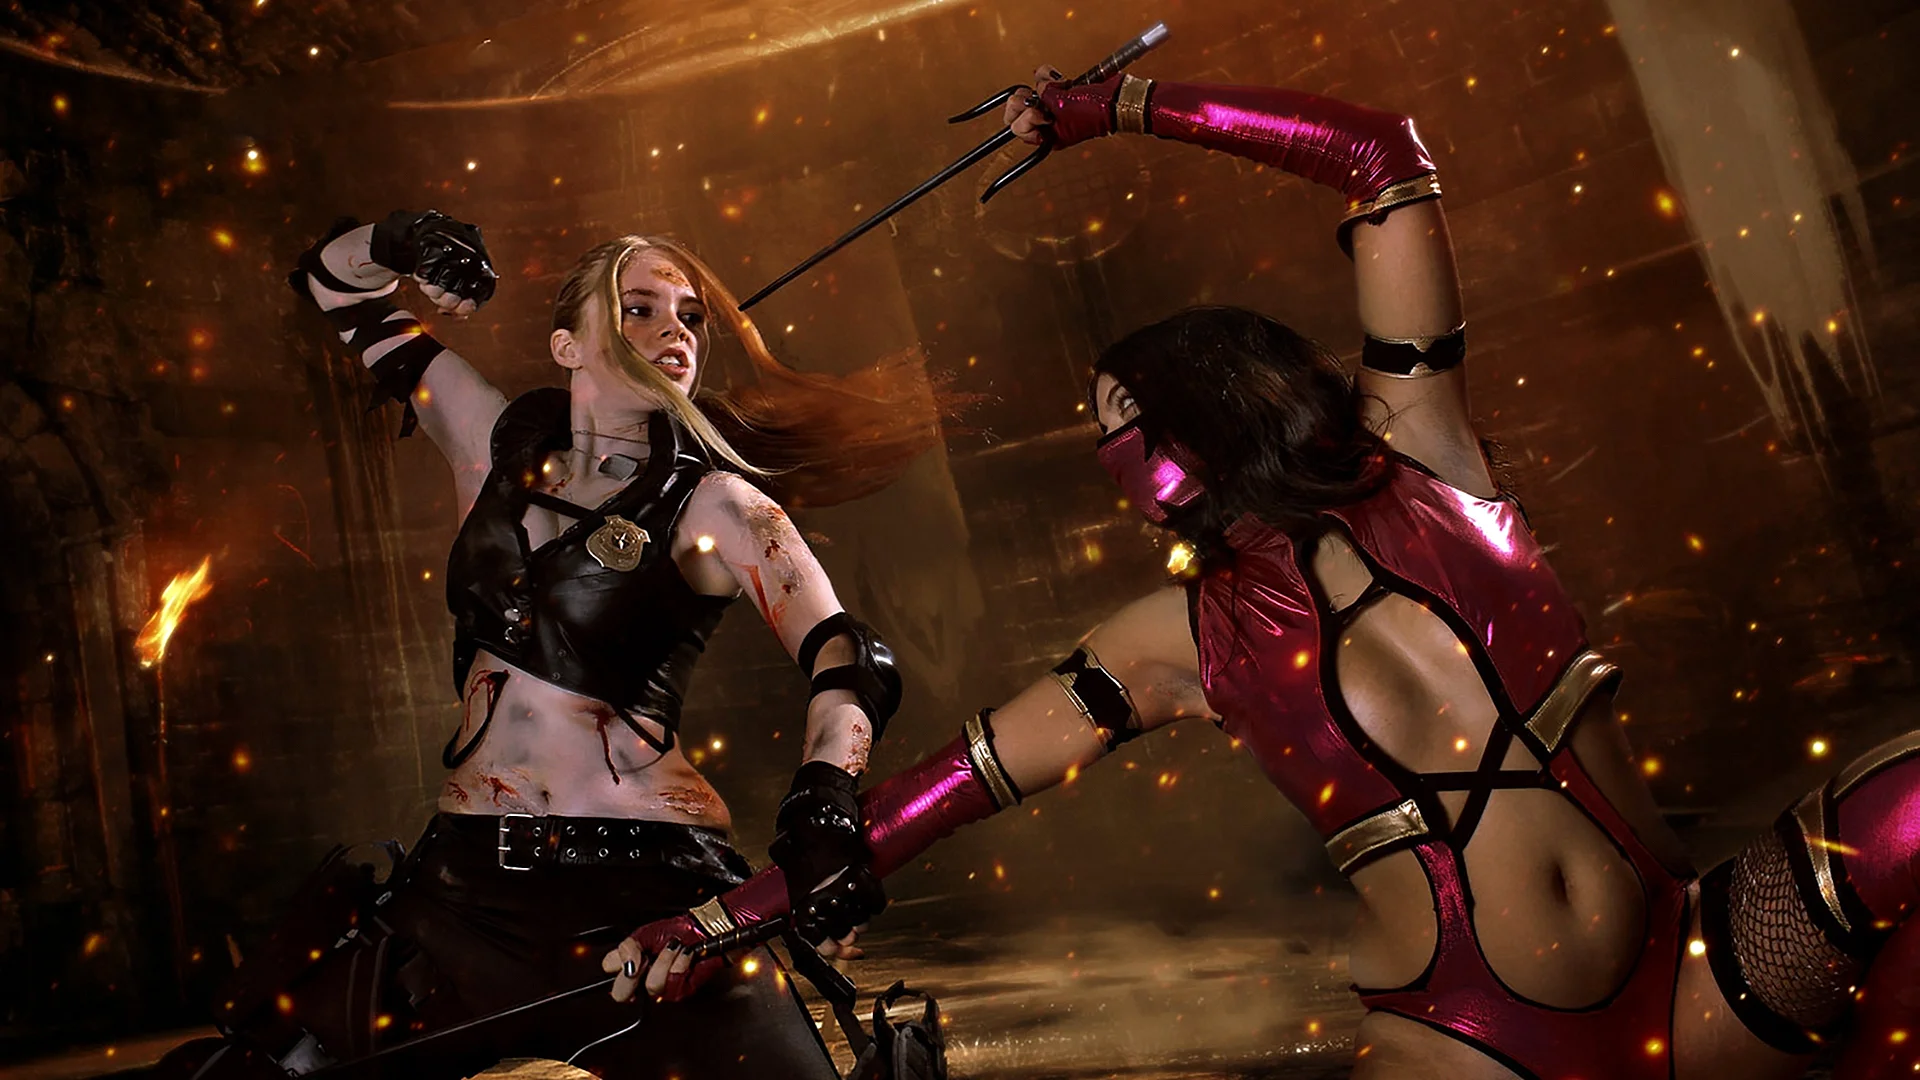 Sonya Mortal Kombat Cosplay Wallpaper